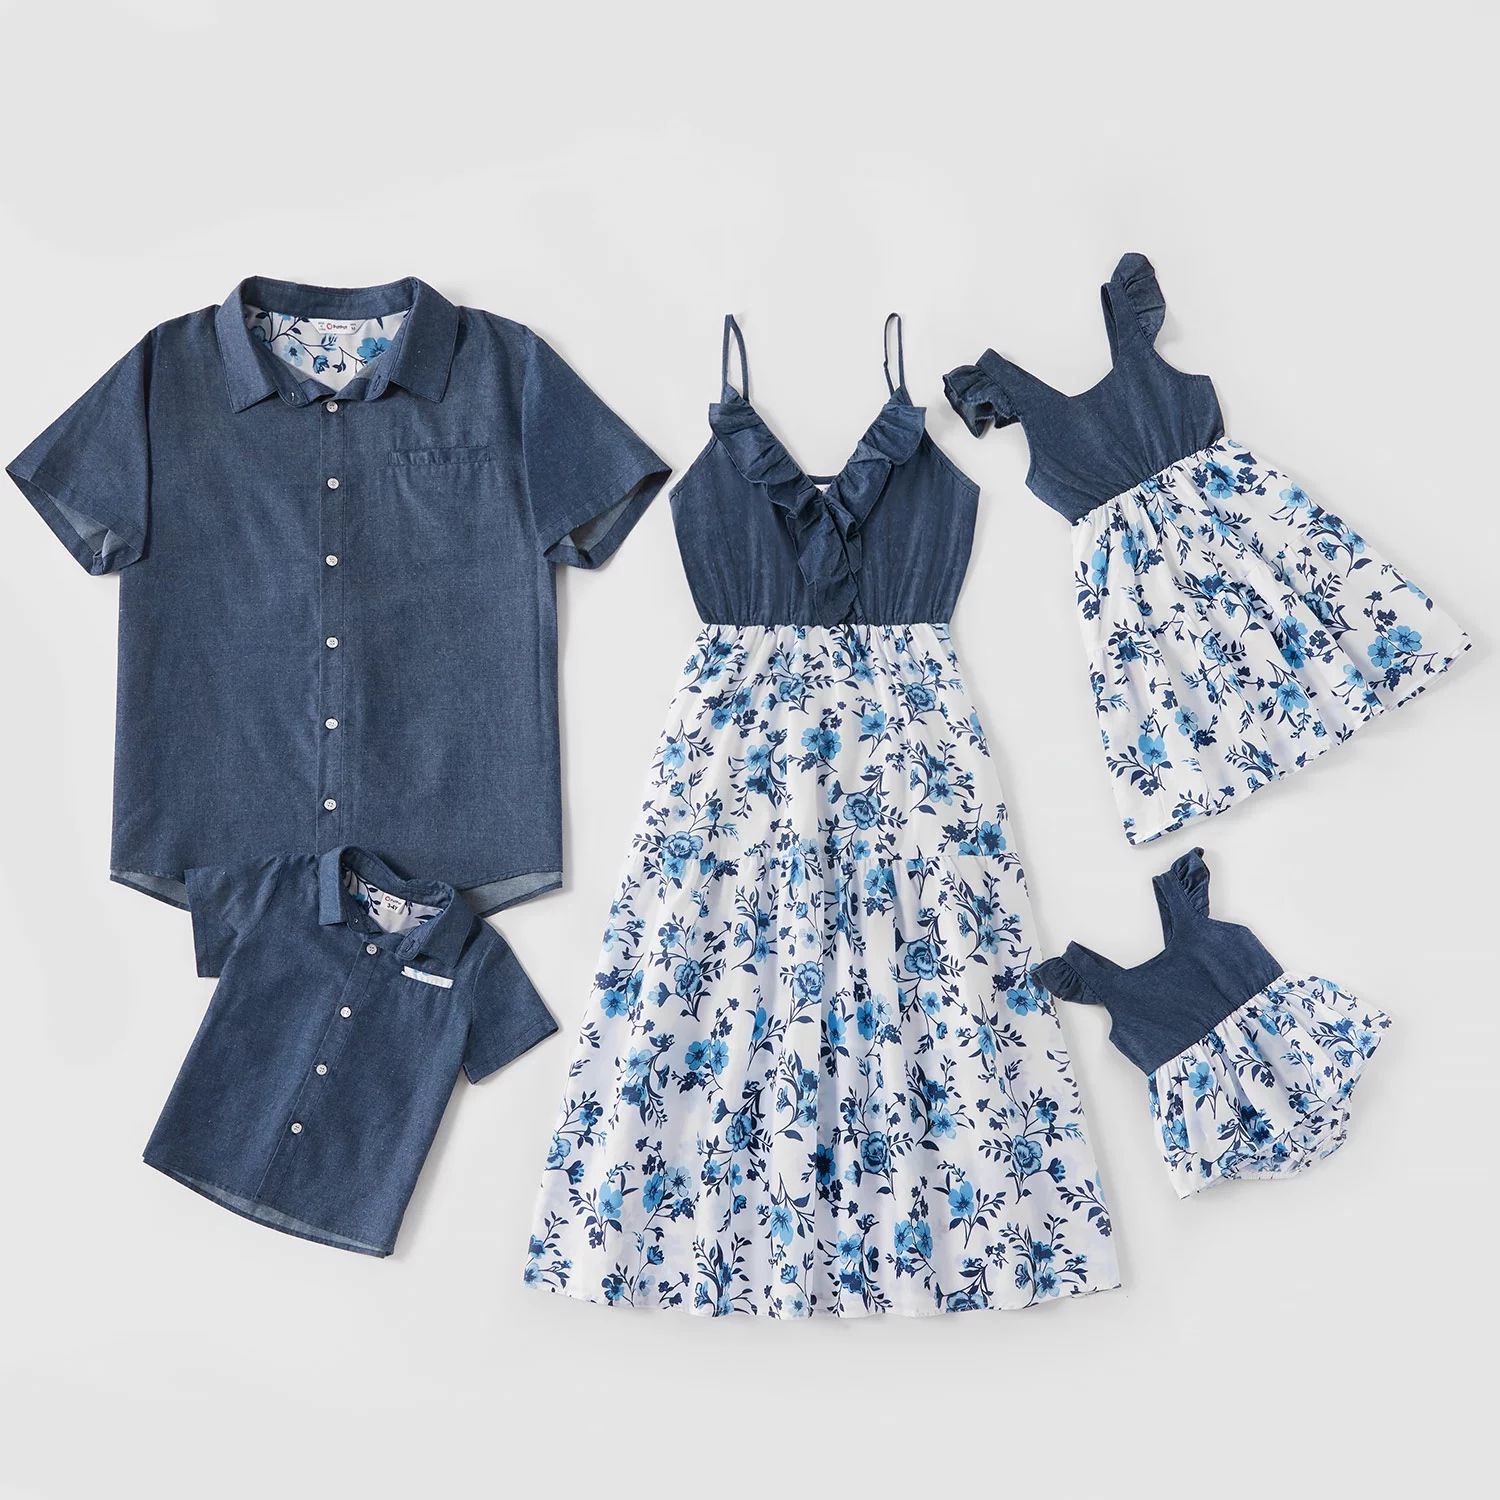 PatPat Mosaic Cotton Family Matching Floral Flounce Tank Dresses and Denim Tops | Walmart (US)